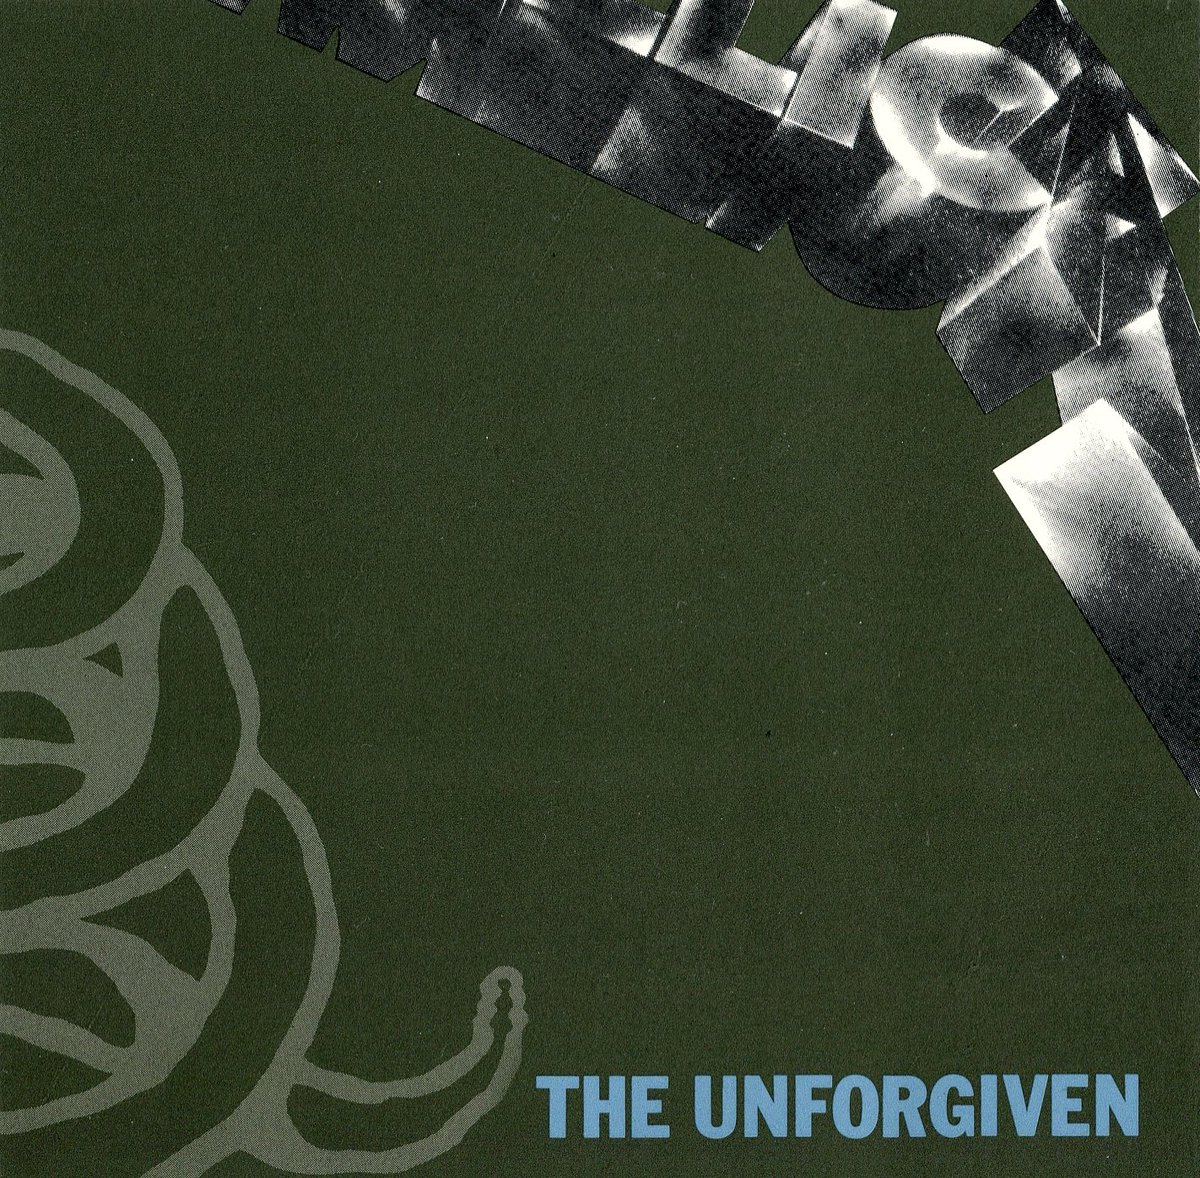 Tres canciones que llegarán pronto:

- The Unforgiven (Metallica)
- Dynamite
- My Oh My

#Fortnite | Gracias a @iFireMonkey